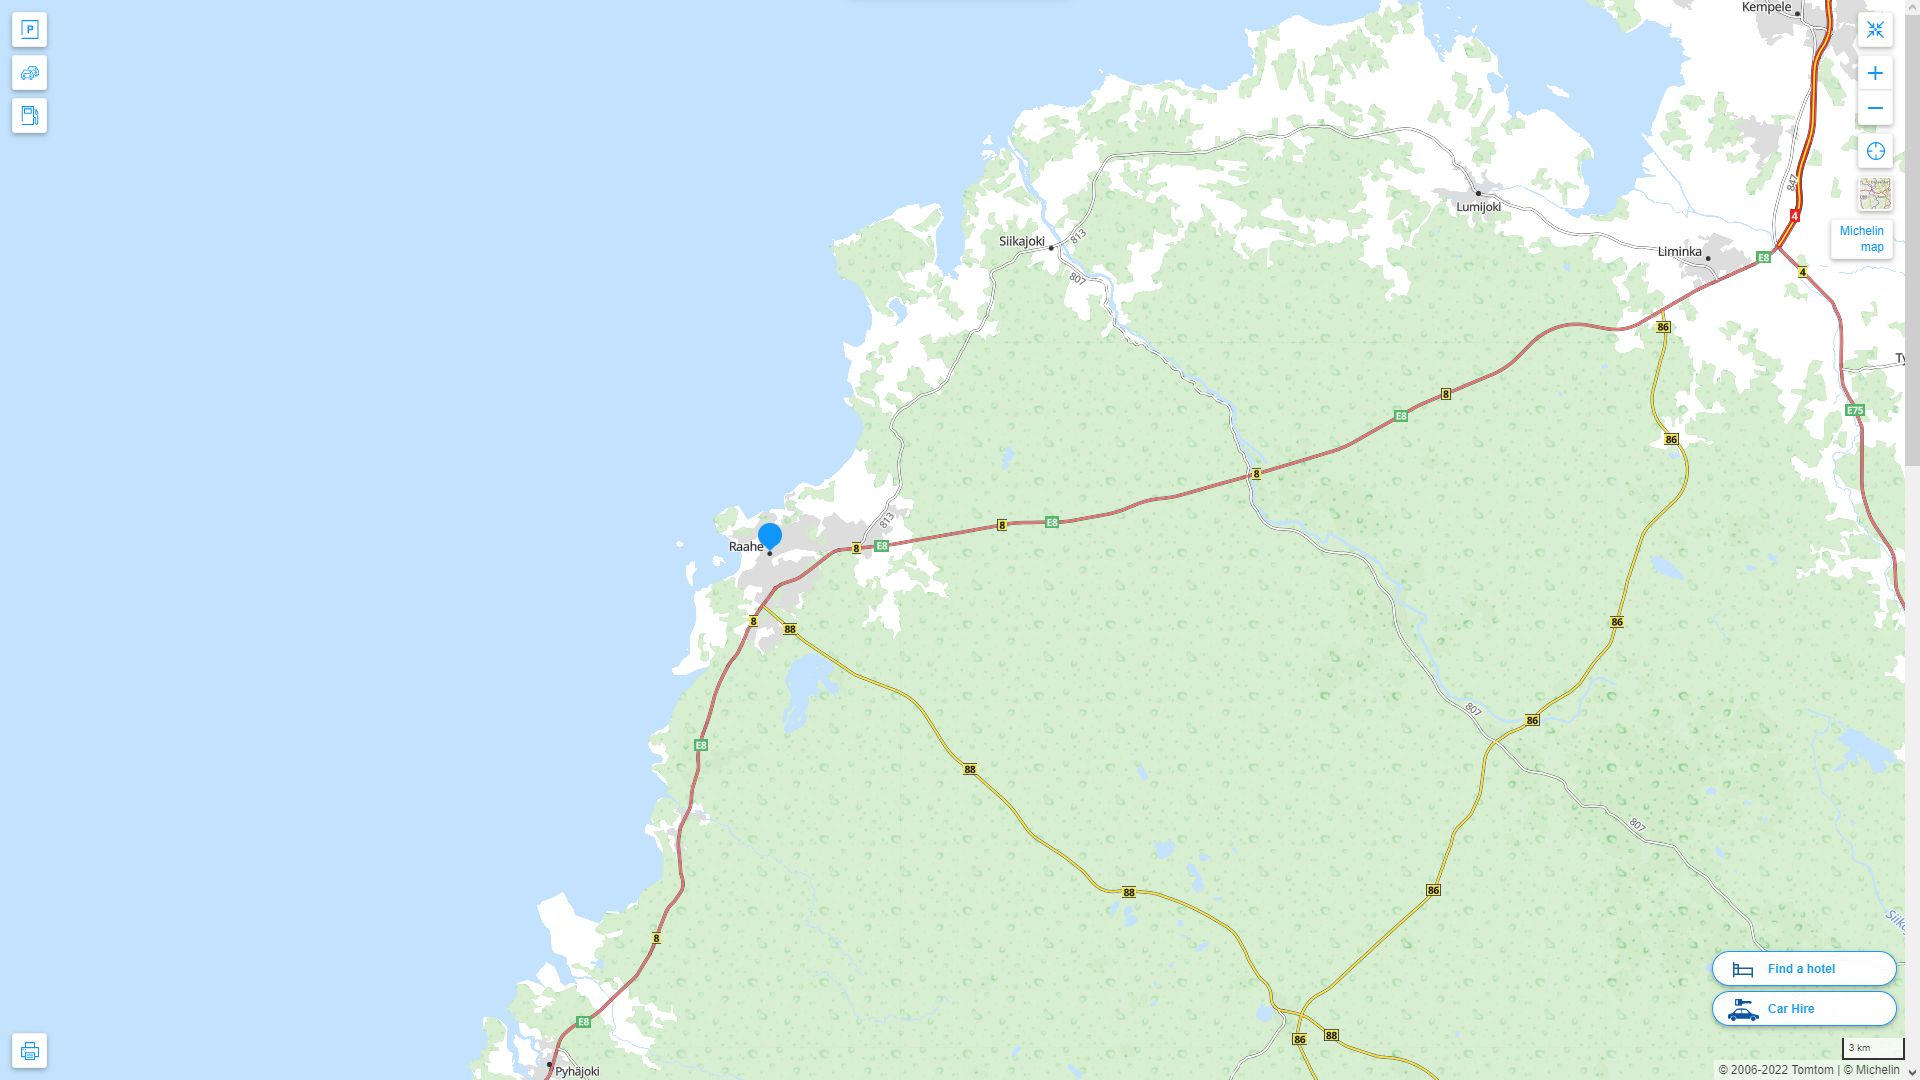 Raahe Finlande Autoroute et carte routiere